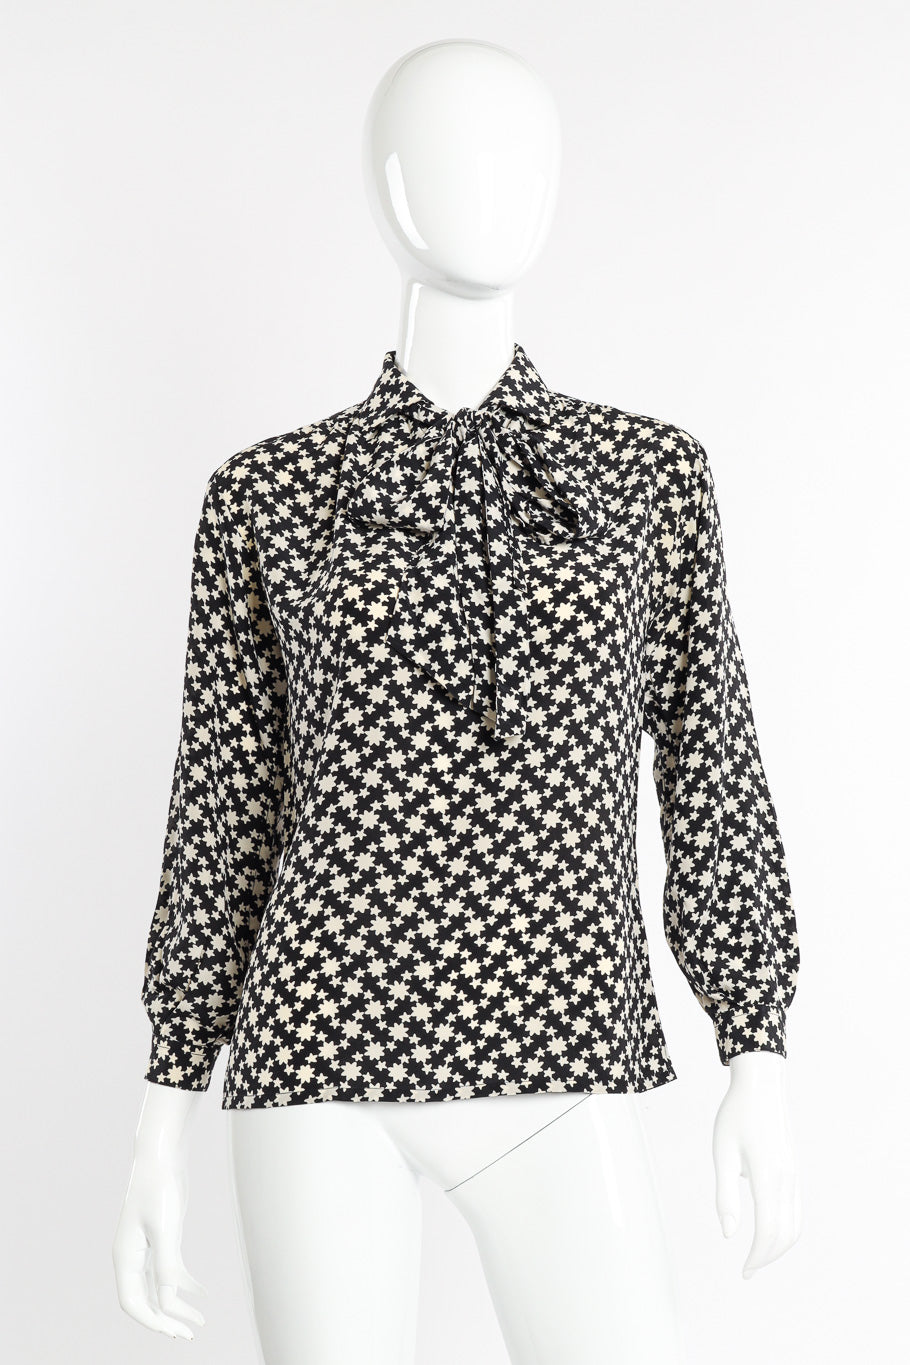 Star print blouse by Yves Saint Laurent on mannequin @recessla